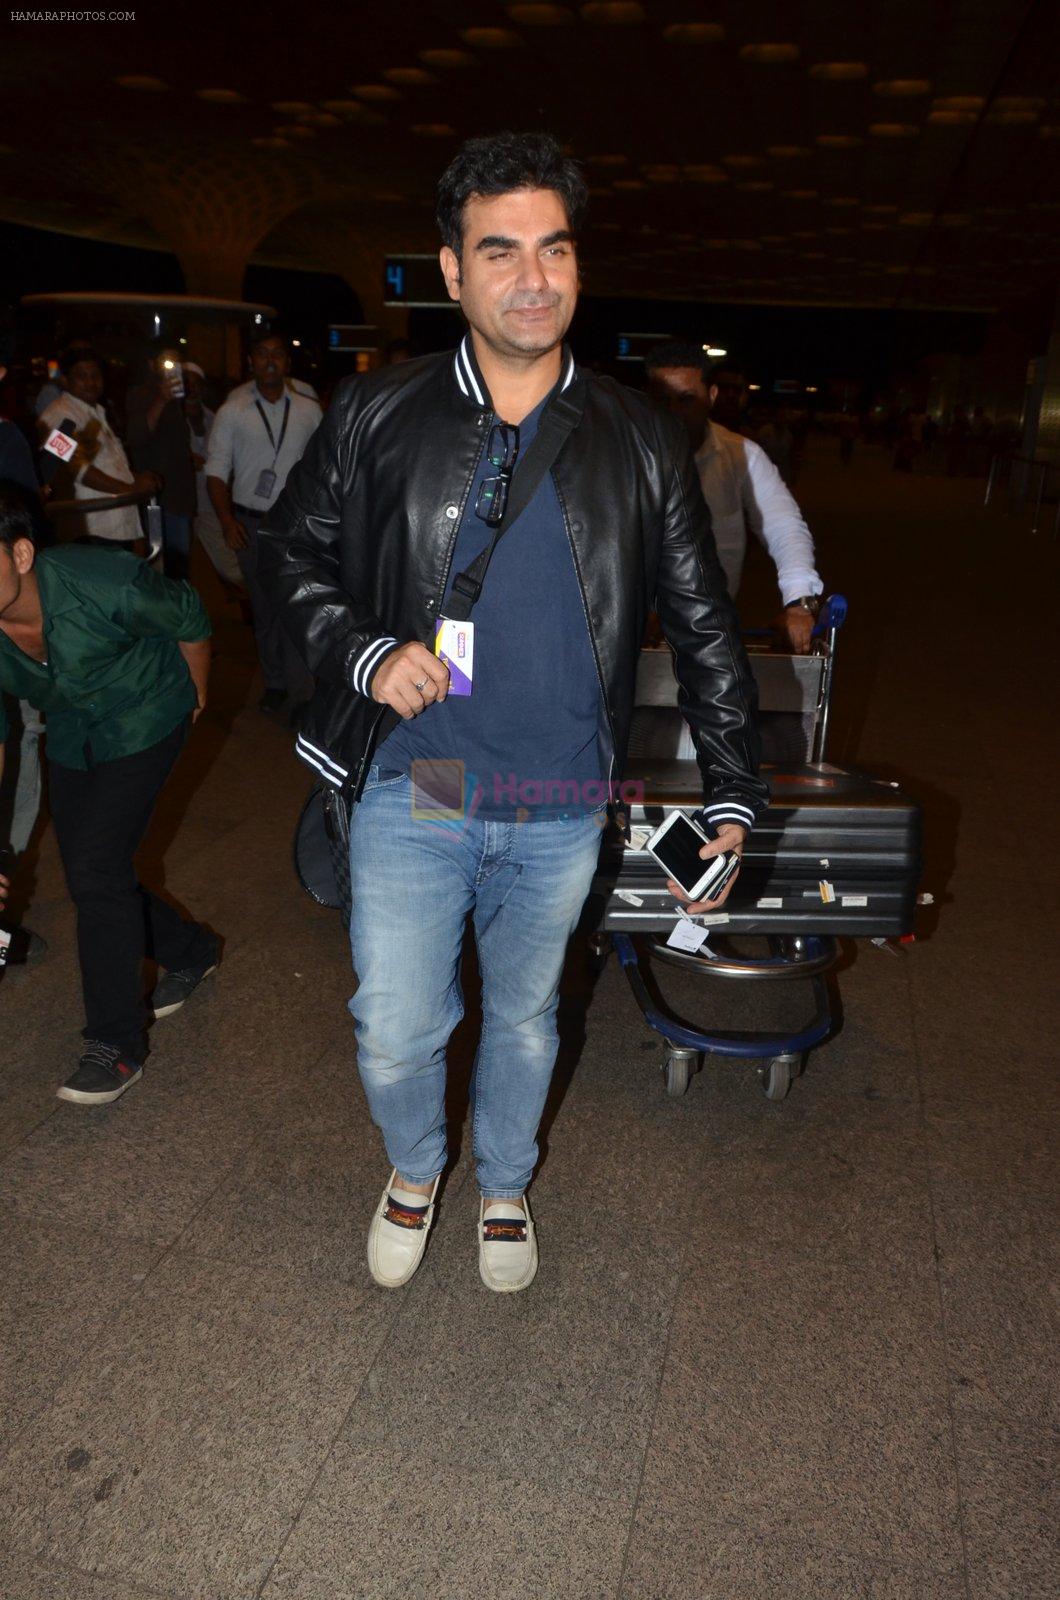 Arbaaz Khan snapped at airport in Mumbai on 22nd June 2016